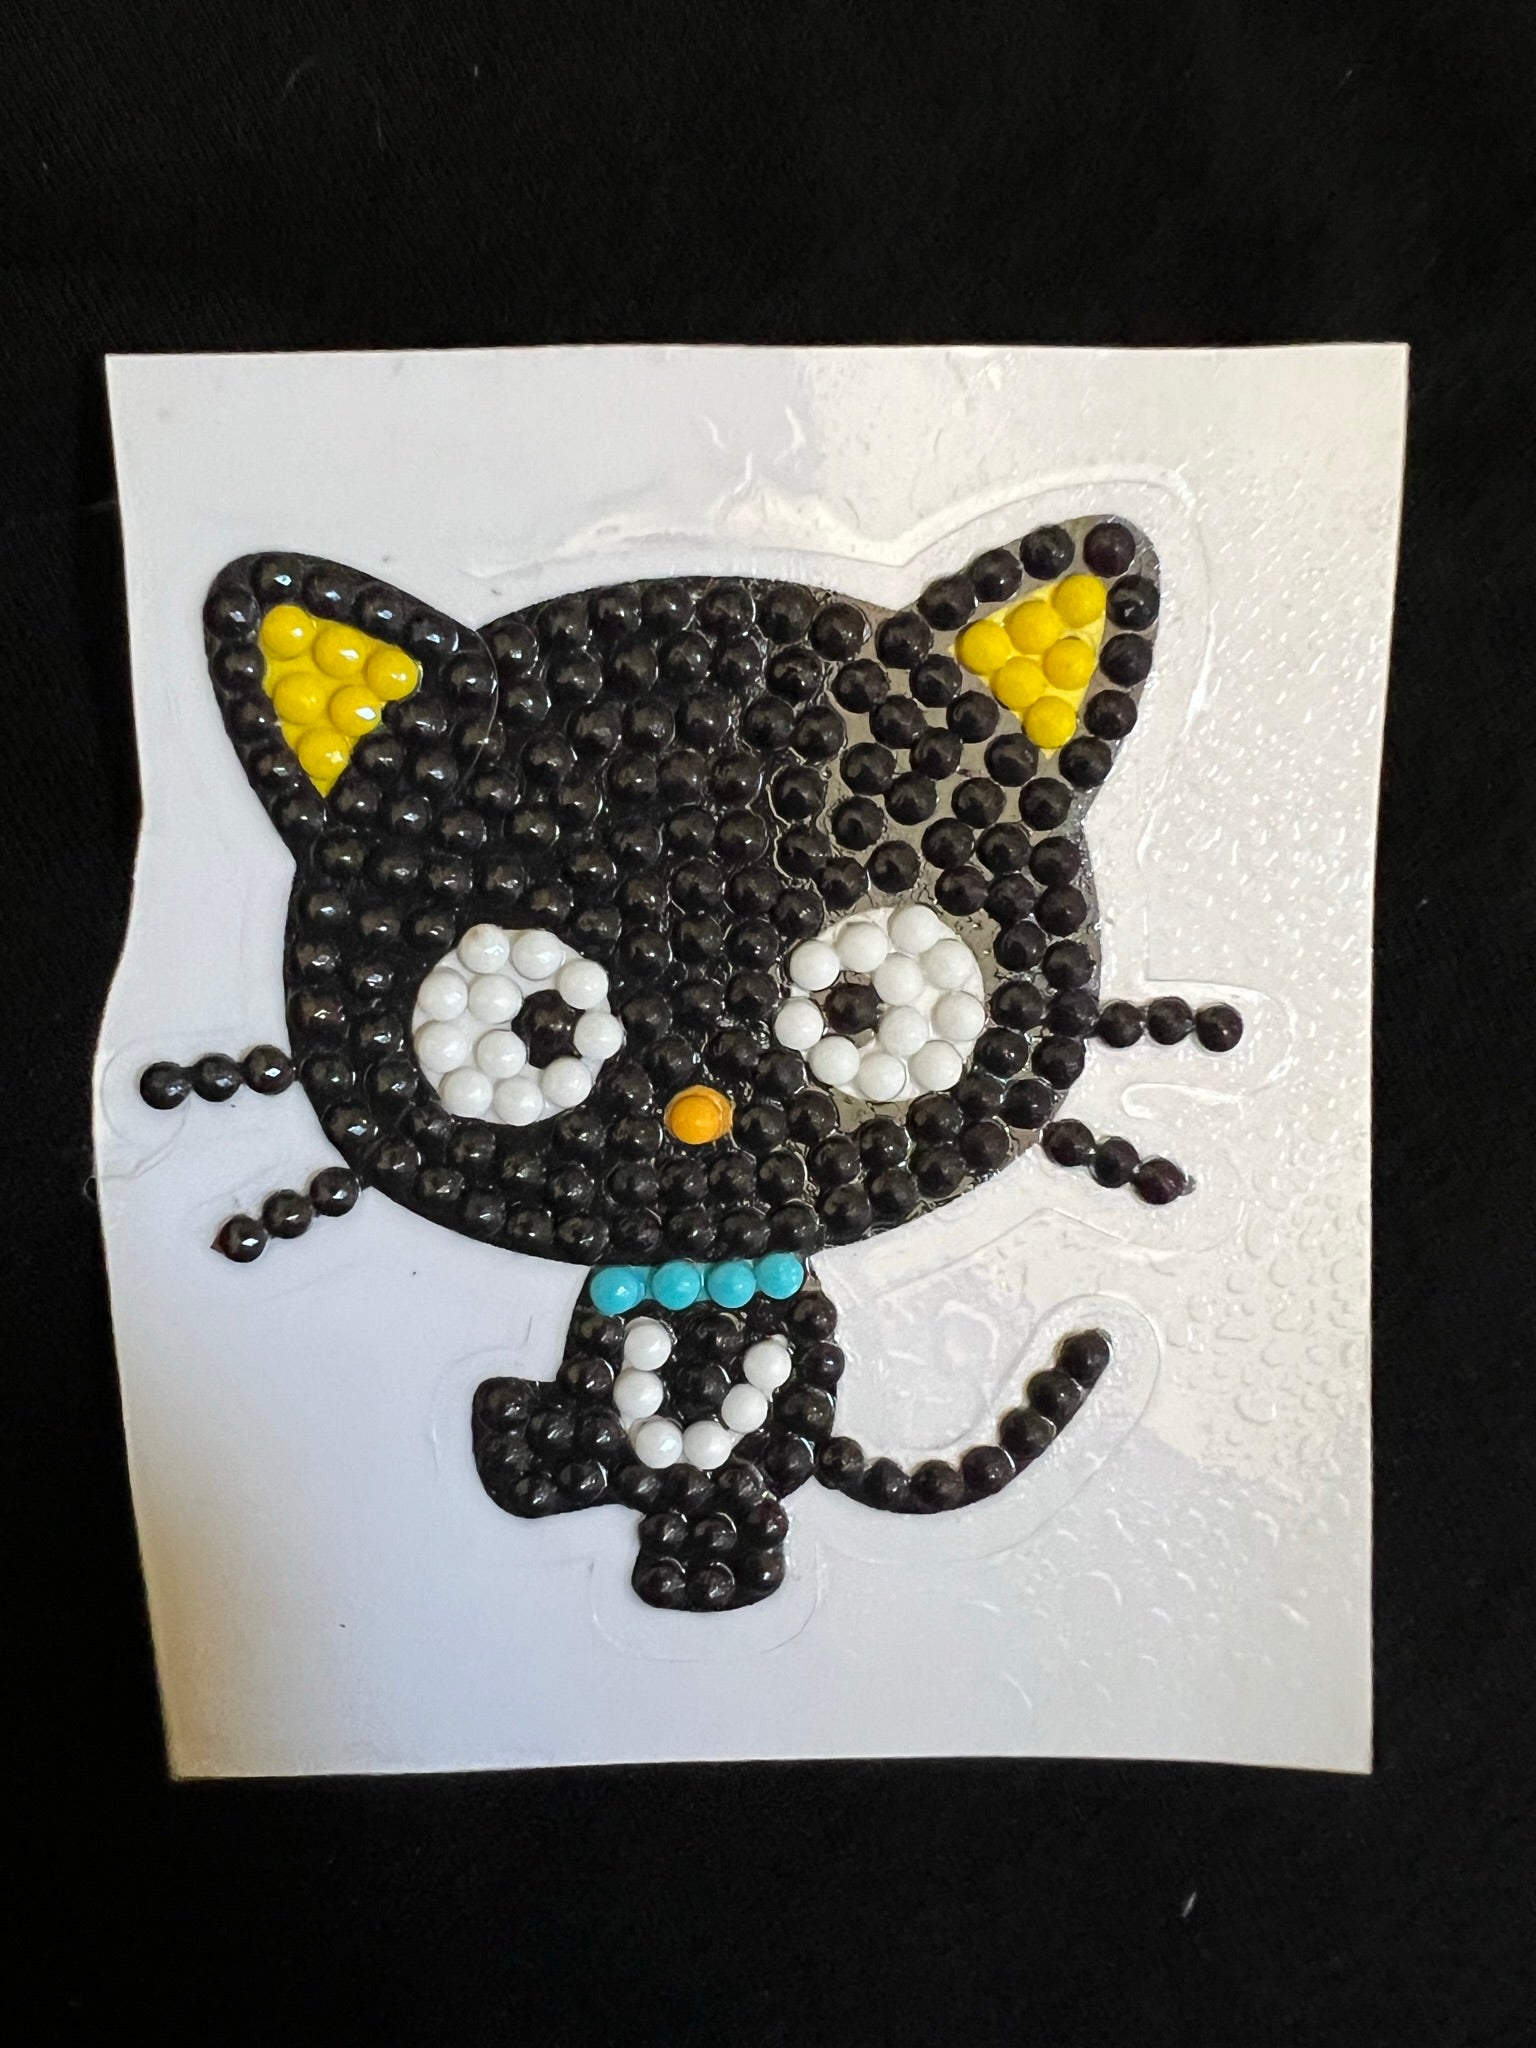 Transparent sticker images — deadcantdraw: Transparent Chococat stickers  made